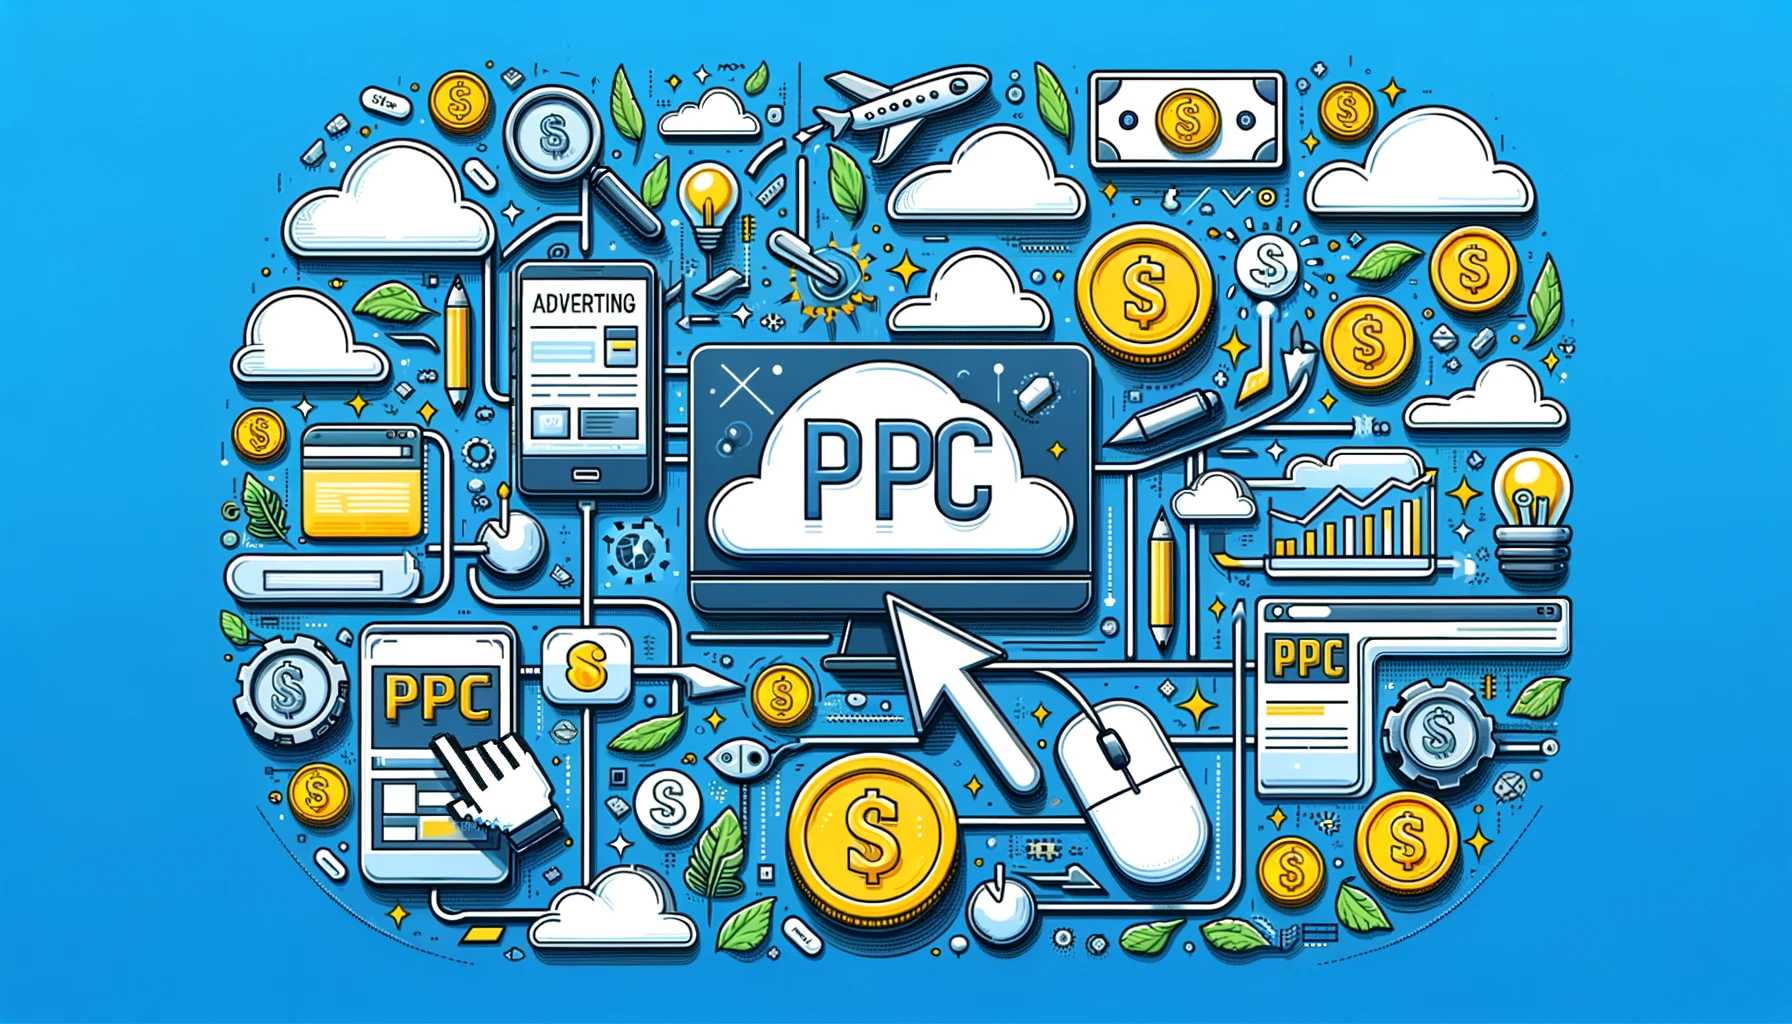 PPC-Advertising-Illustration-Clicks-Revenue-Conversion-Graphs-Coins-Cloud-Computing-Lightbulbs-Online-Marketing-Tools-Blue-Background